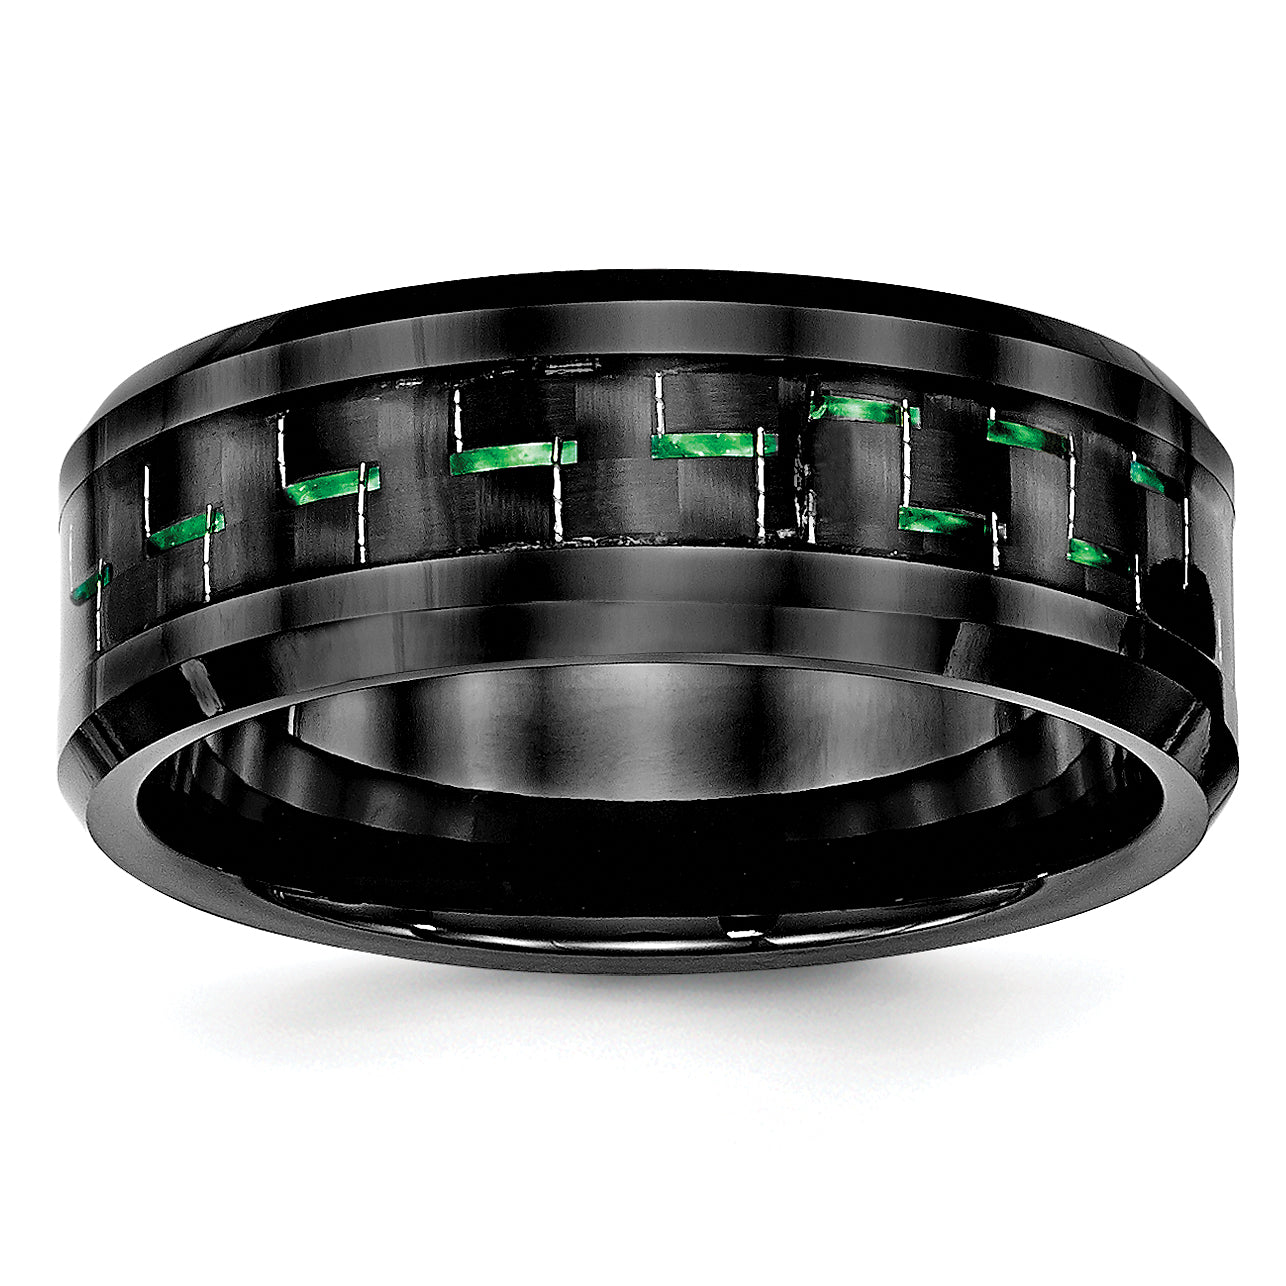 Ceramic Black with Green Carbon Fiber Inlay Beveled Edge Ring